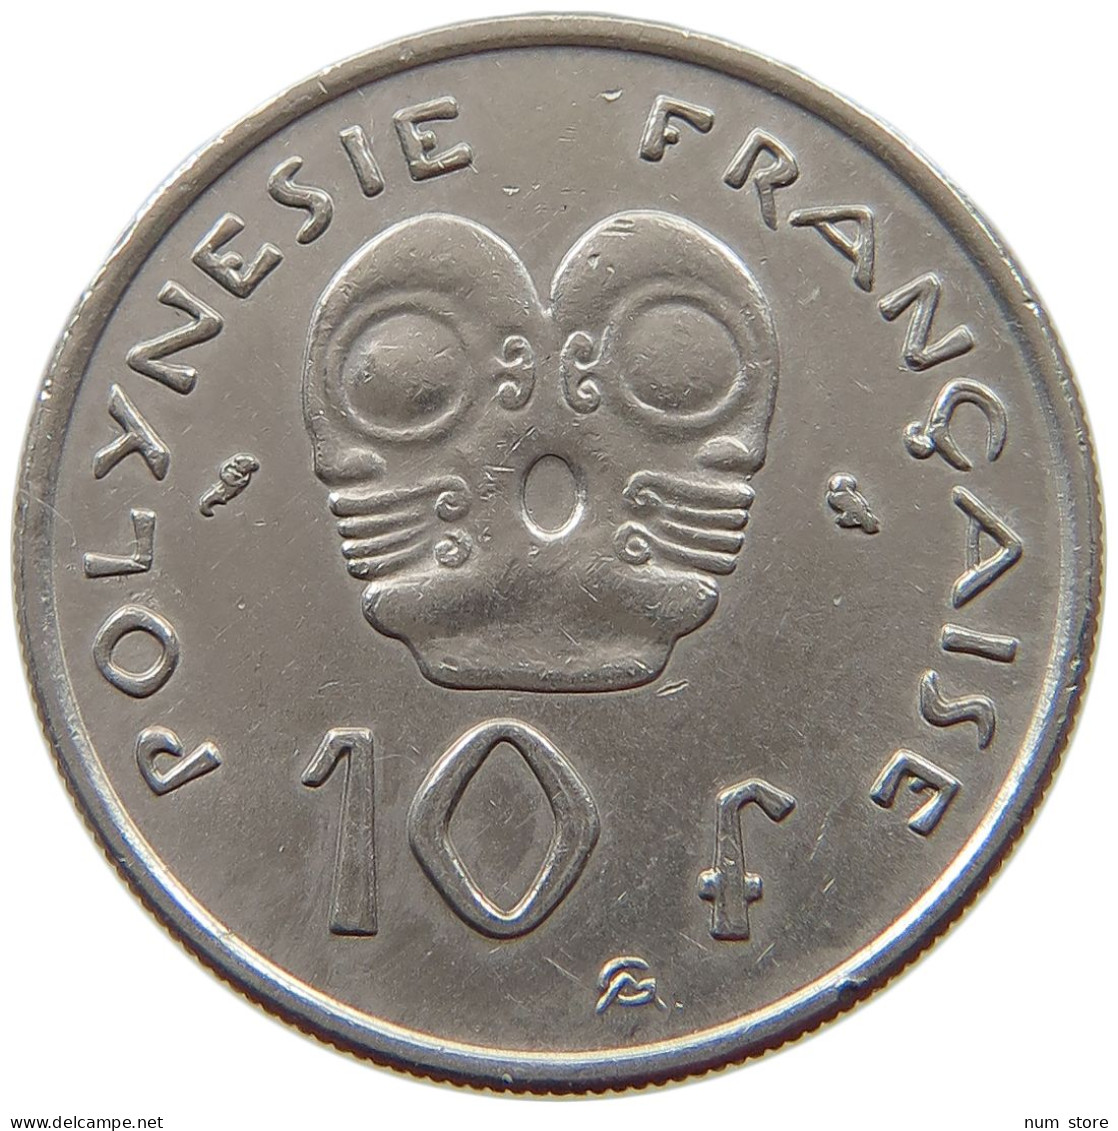 POLYNESIA 10 FRANCS 1973  #a015 0683 - Polinesia Francesa